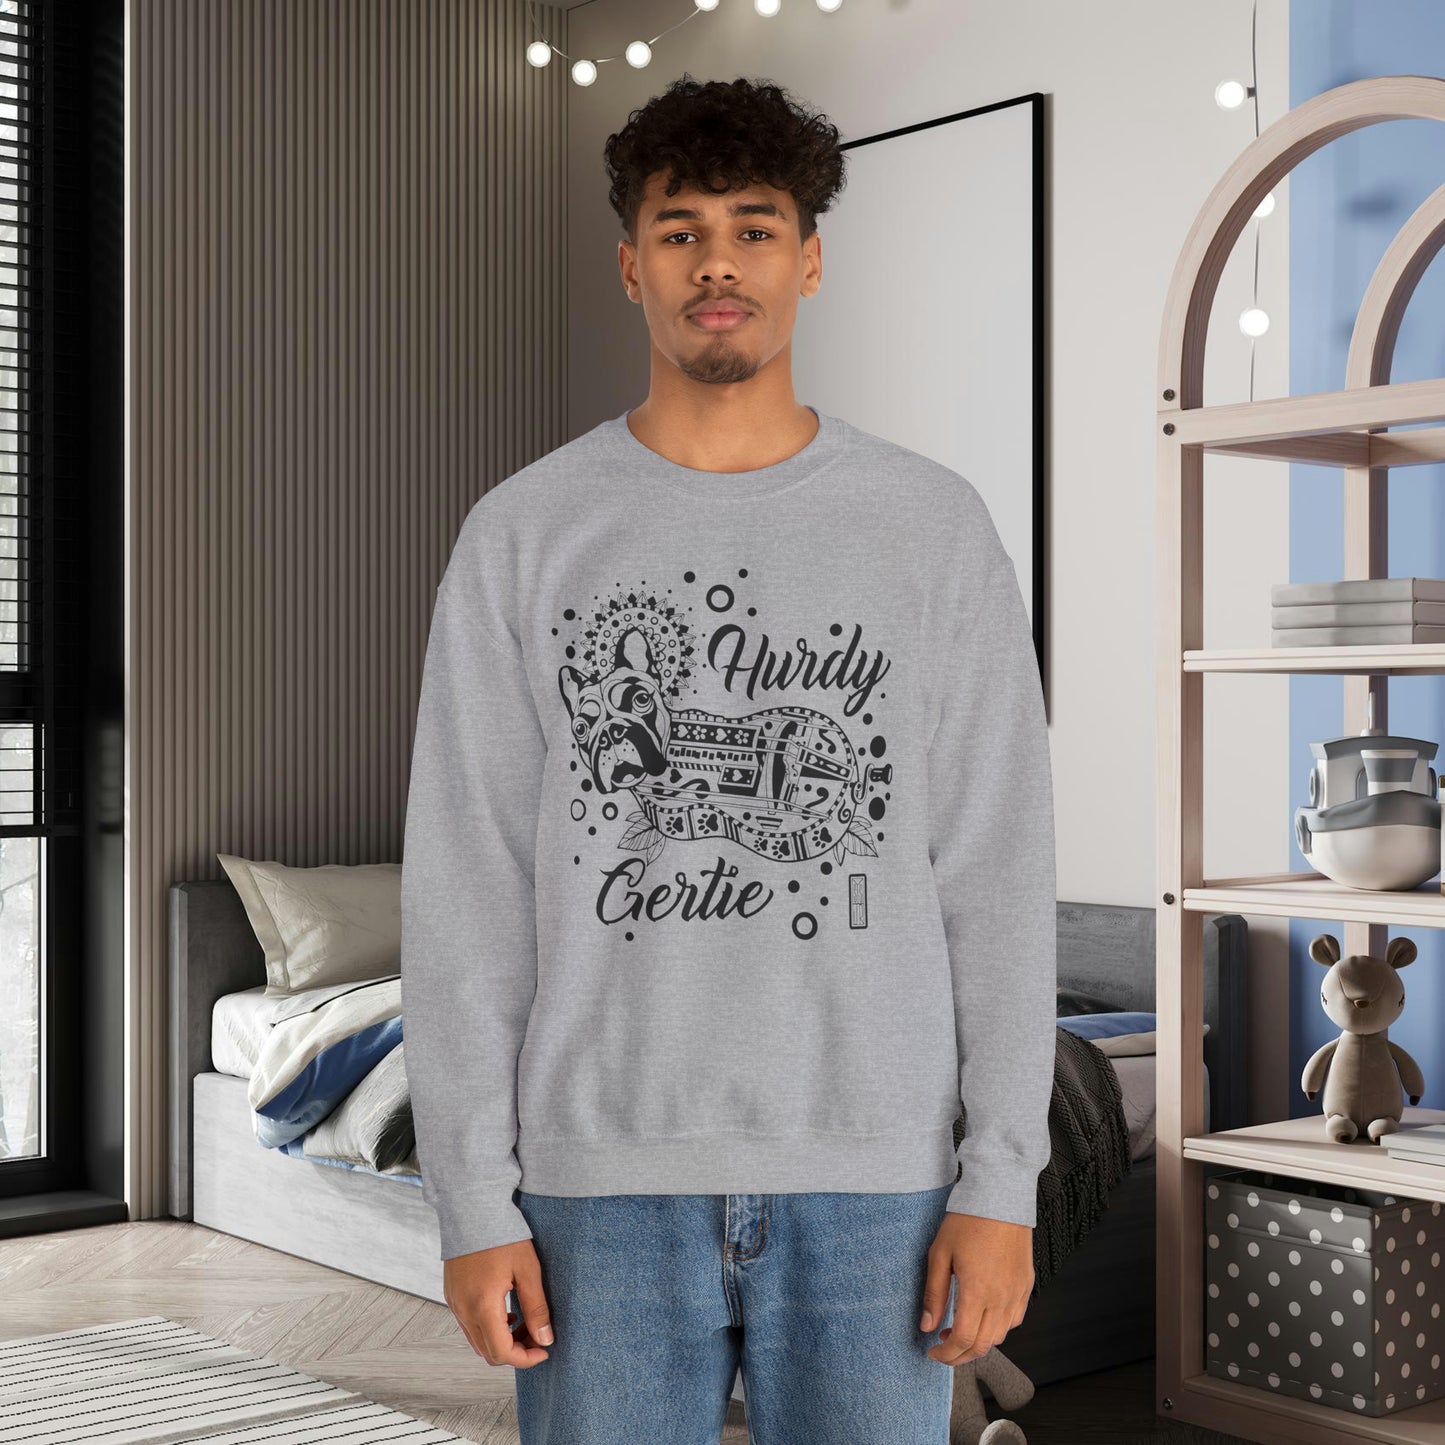 Hurdy Gertie Crew Neck Sweatshirt, Frenchton Dog Line Art Sweat Shirt